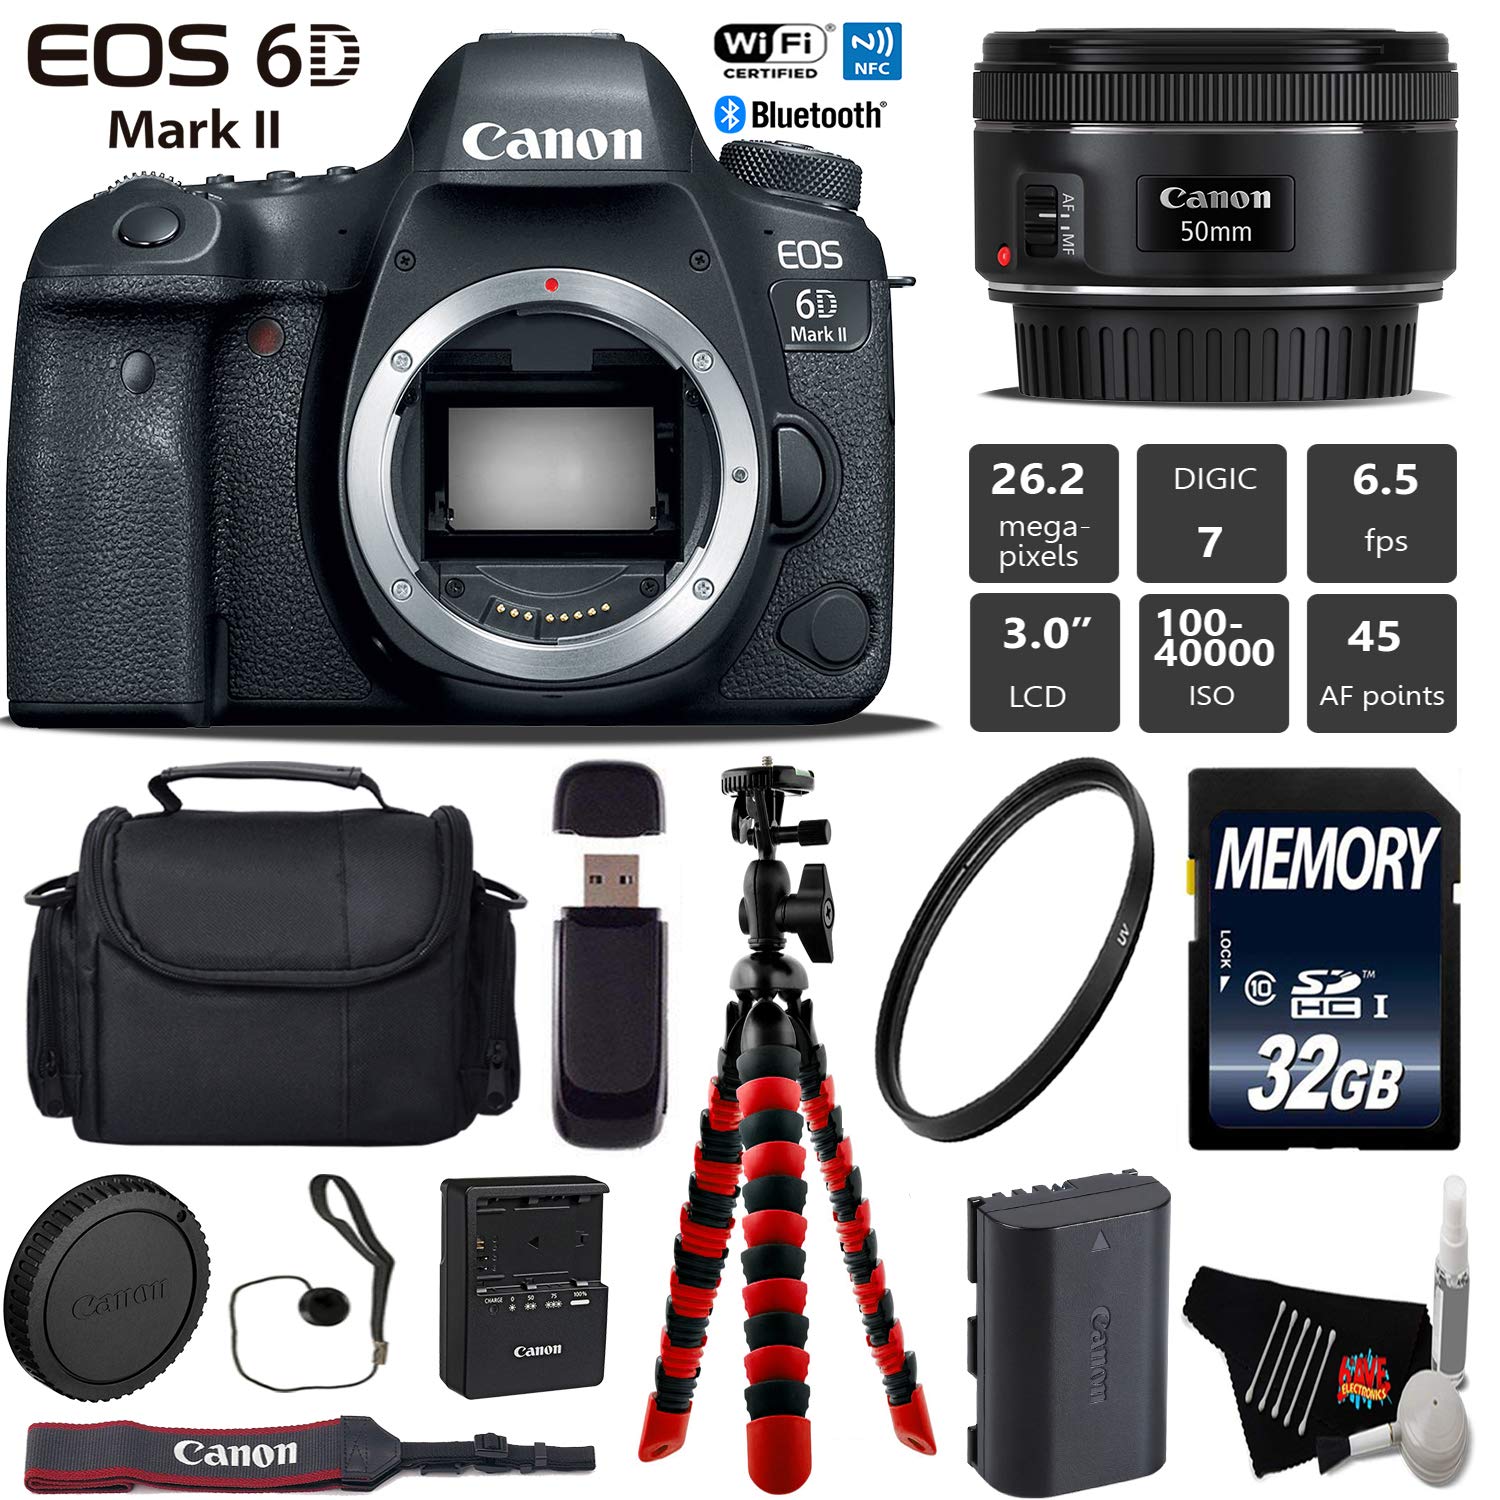 Canon EOS 6D Mark II DSLR Camera with 50mm f/1.8 STM Lens + Wireless Remote + UV Protection Filter + Case + Wrist Strap Starter Bundle